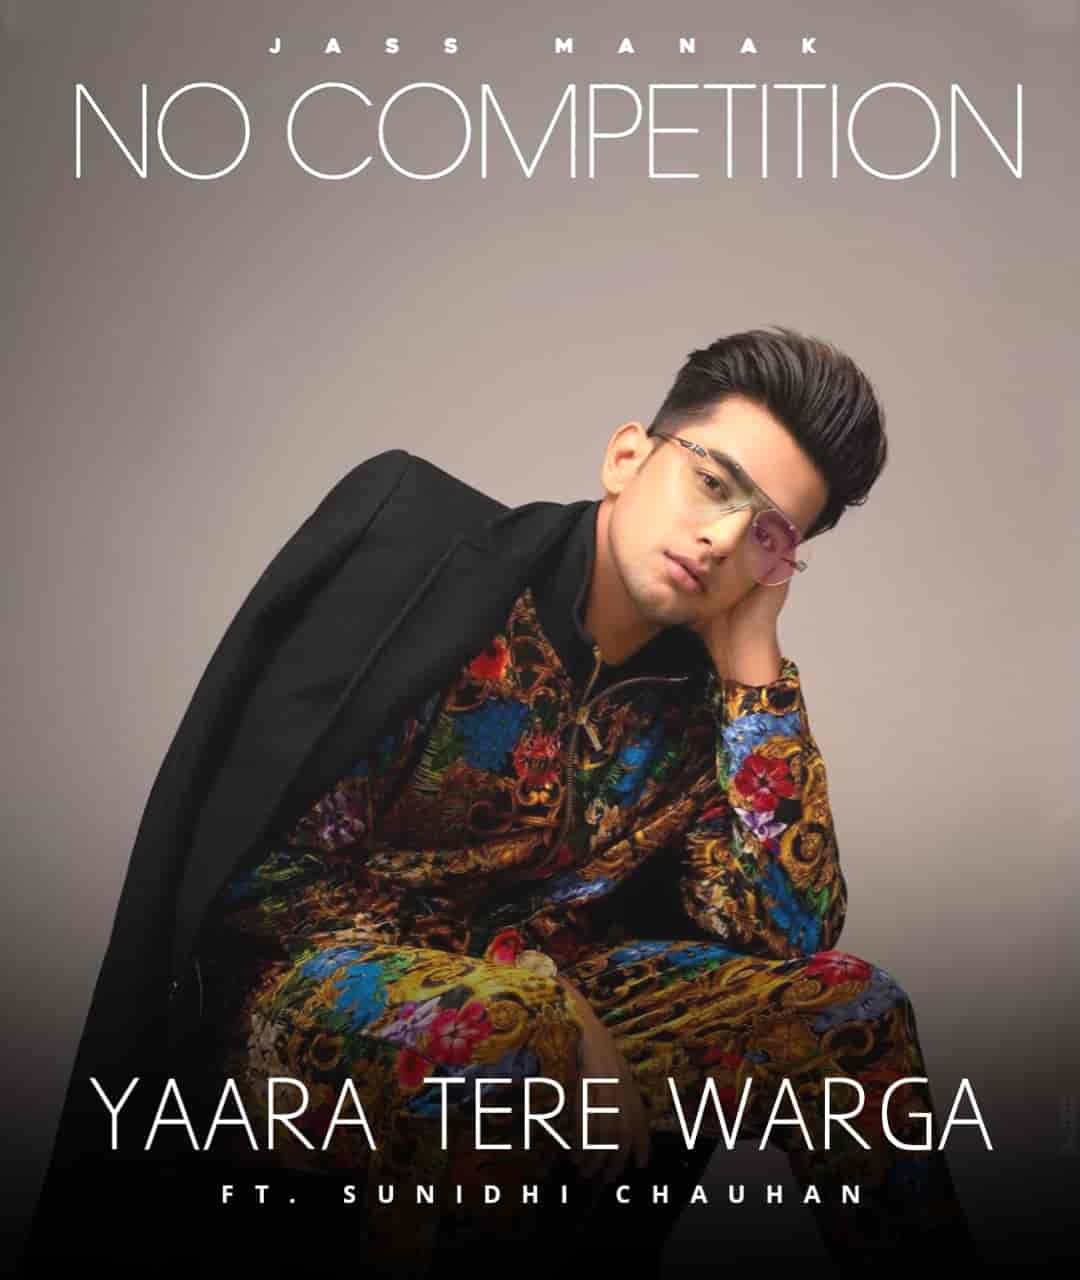 Yaara Tere Warga Punjabi Song Image From Album No Competition Of Jass Manak